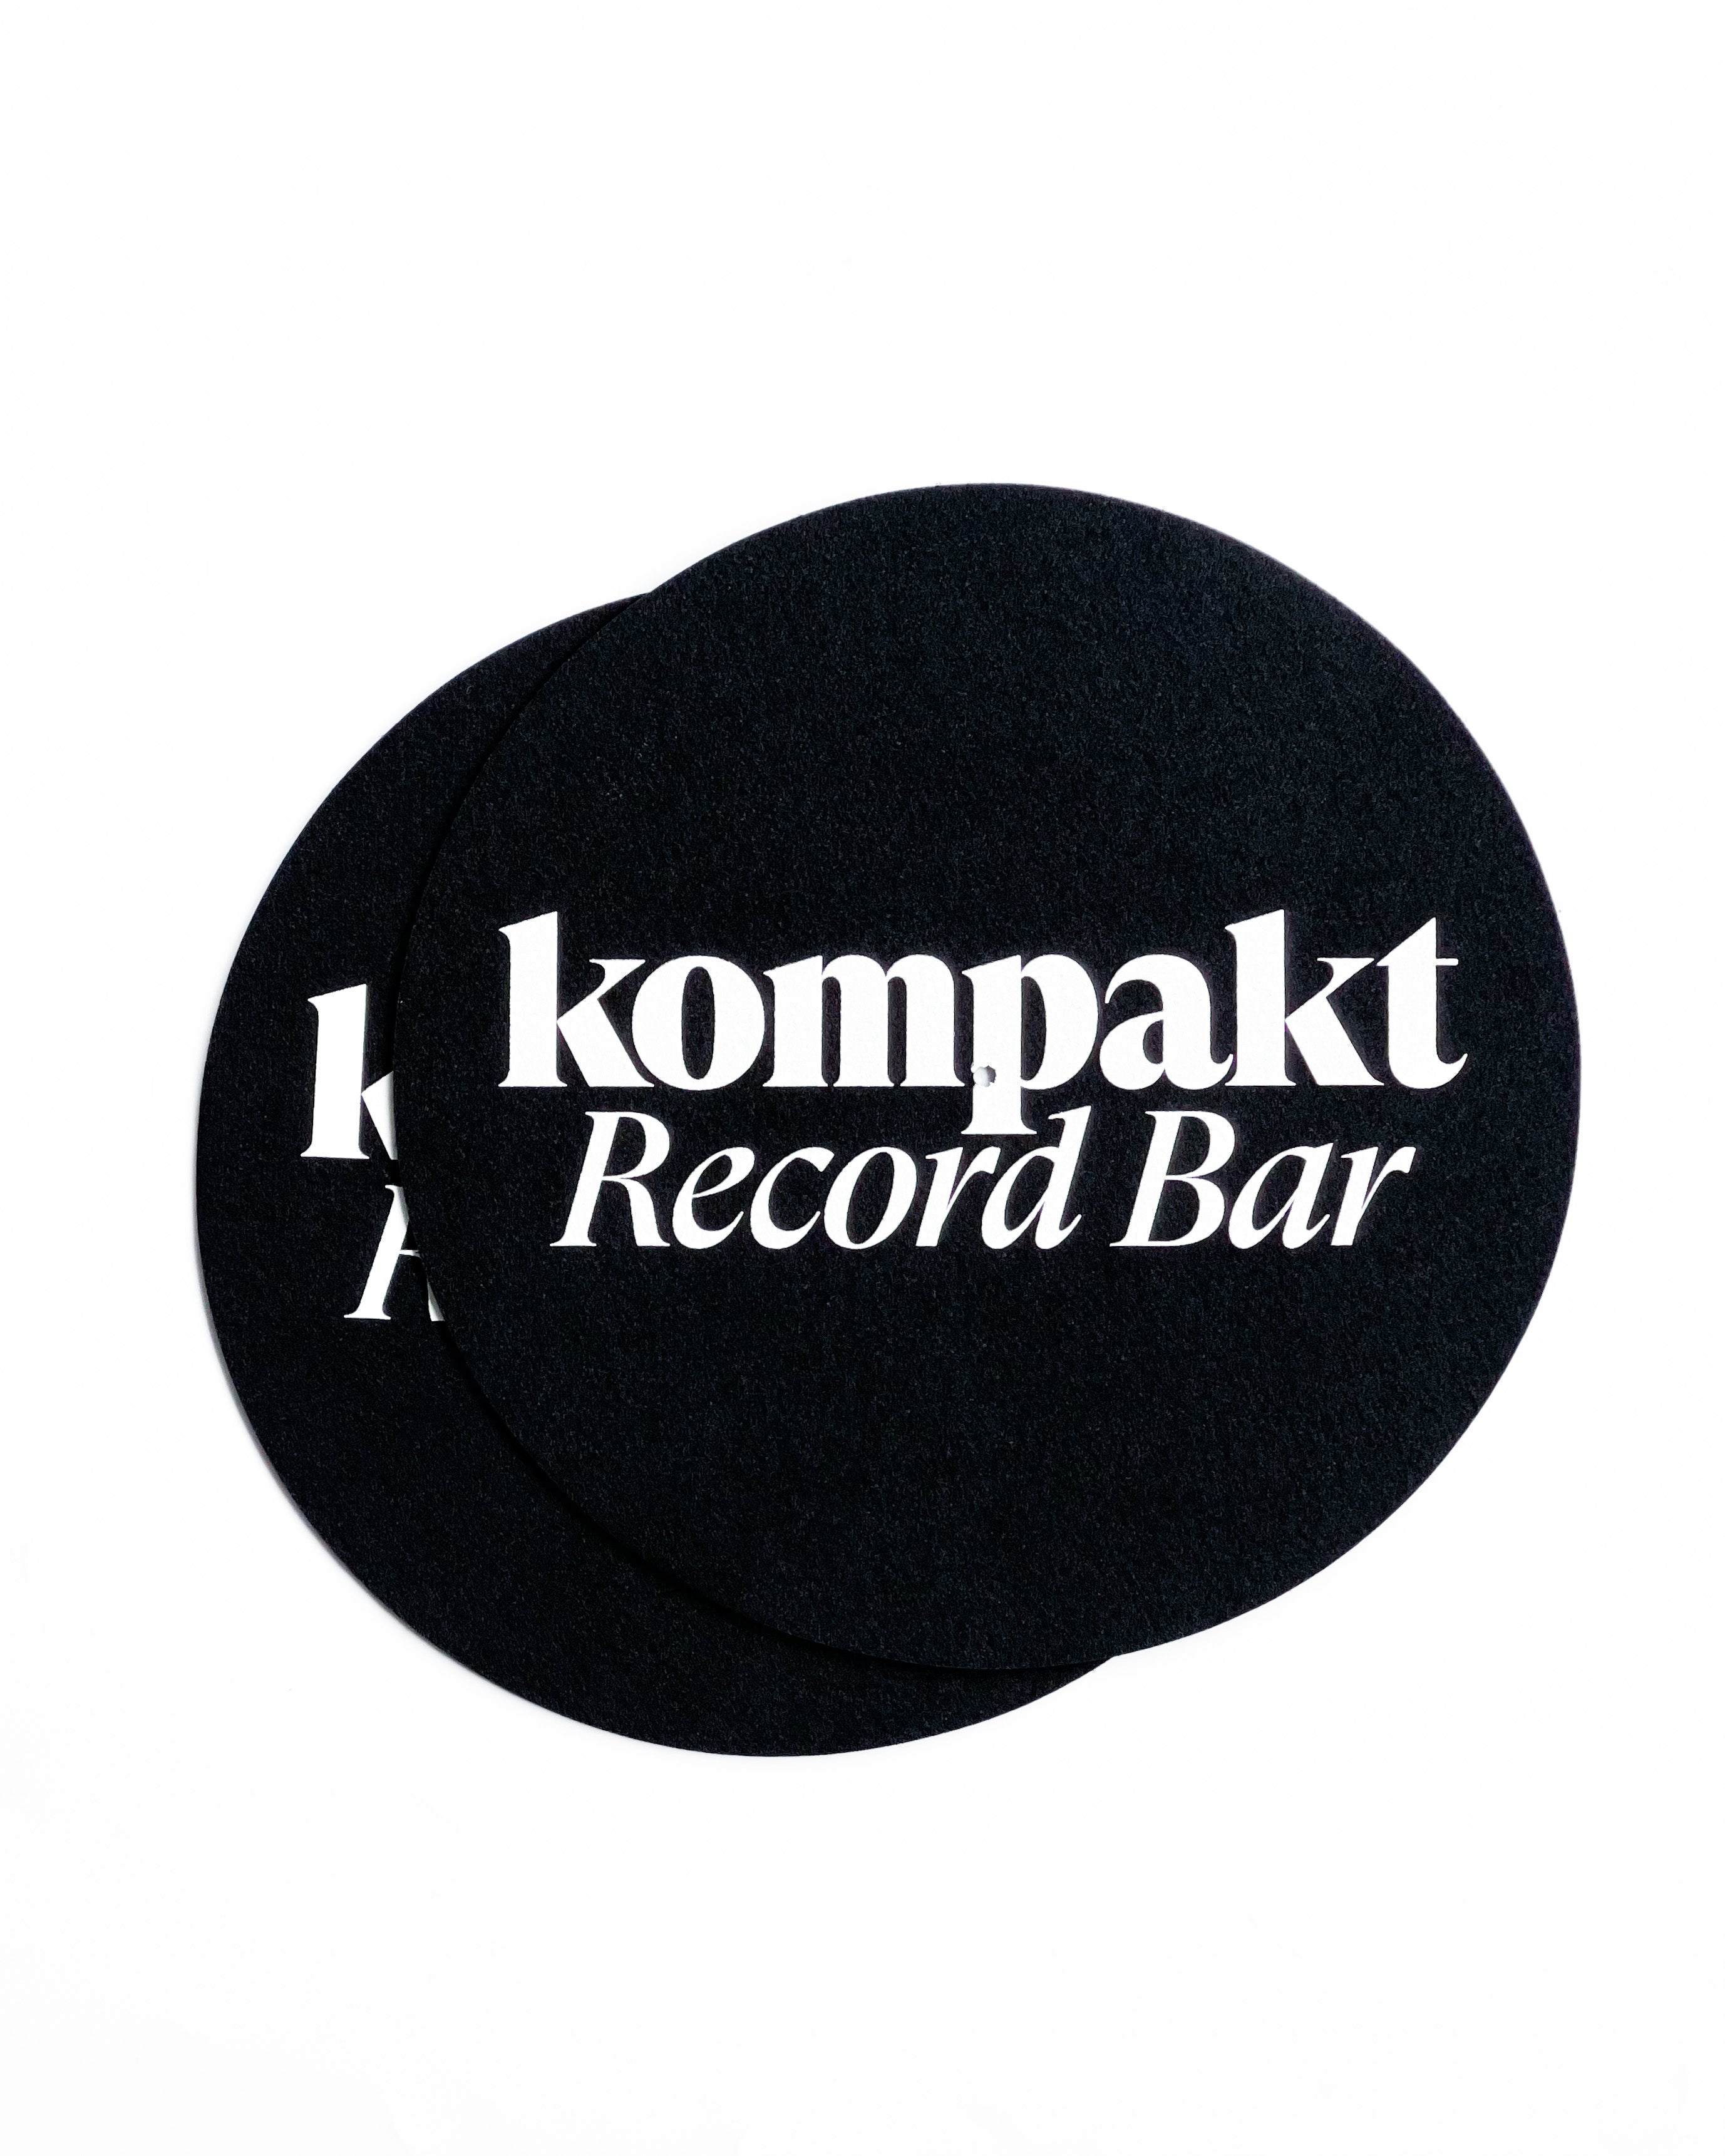 【KOMPAKT RECORD BAR】KRB LOGO SLIPMAT - BLACK